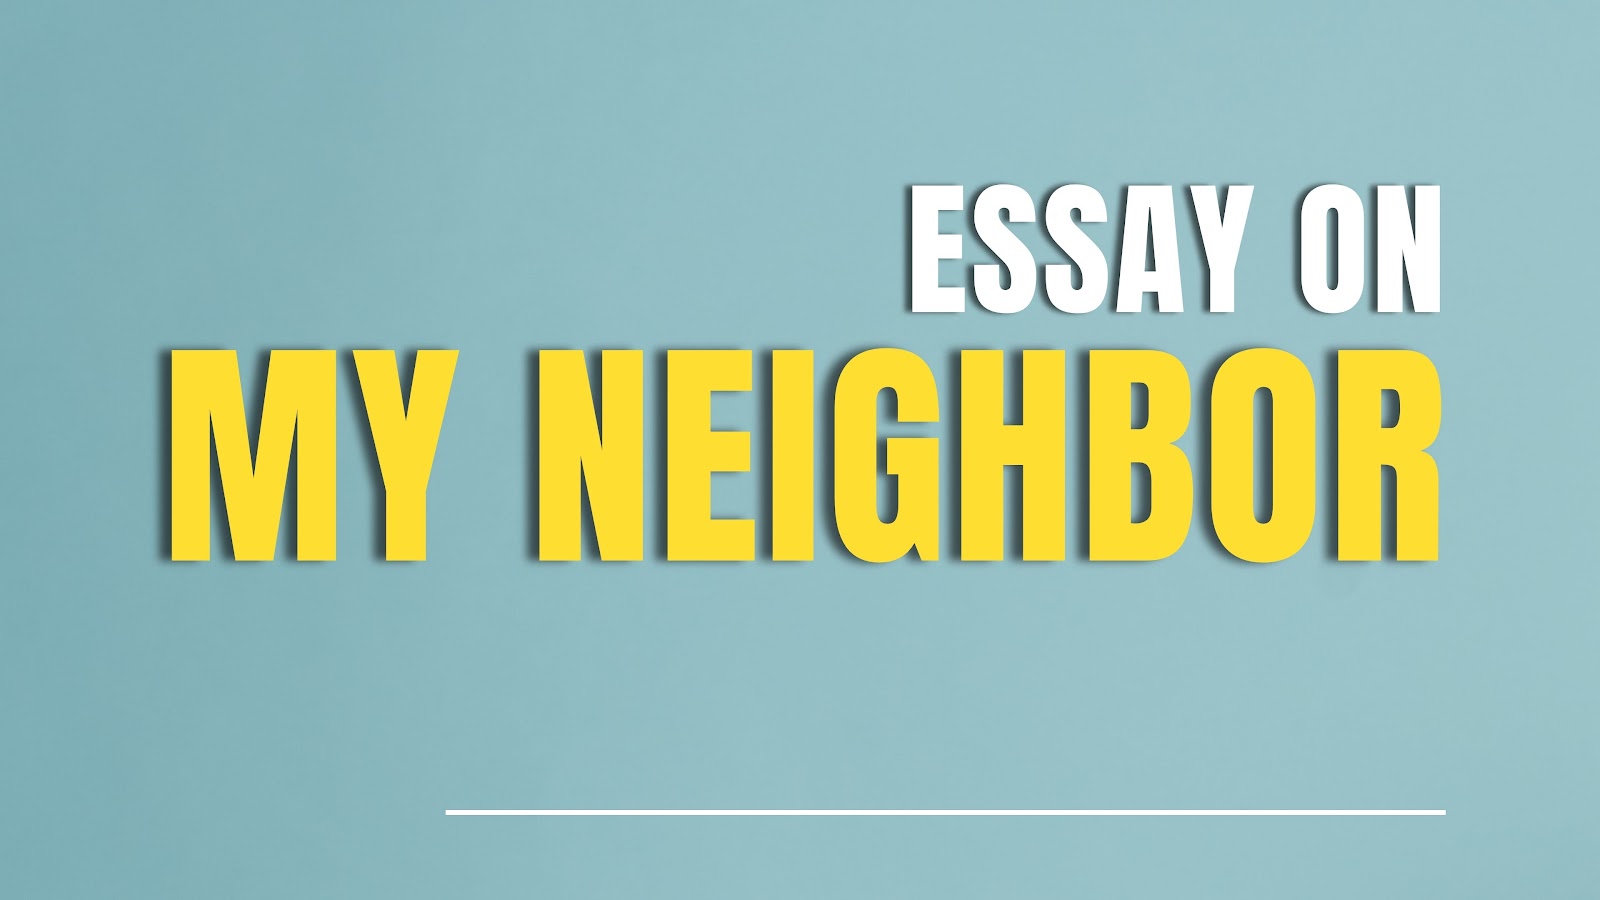 what makes a good neighbor essay